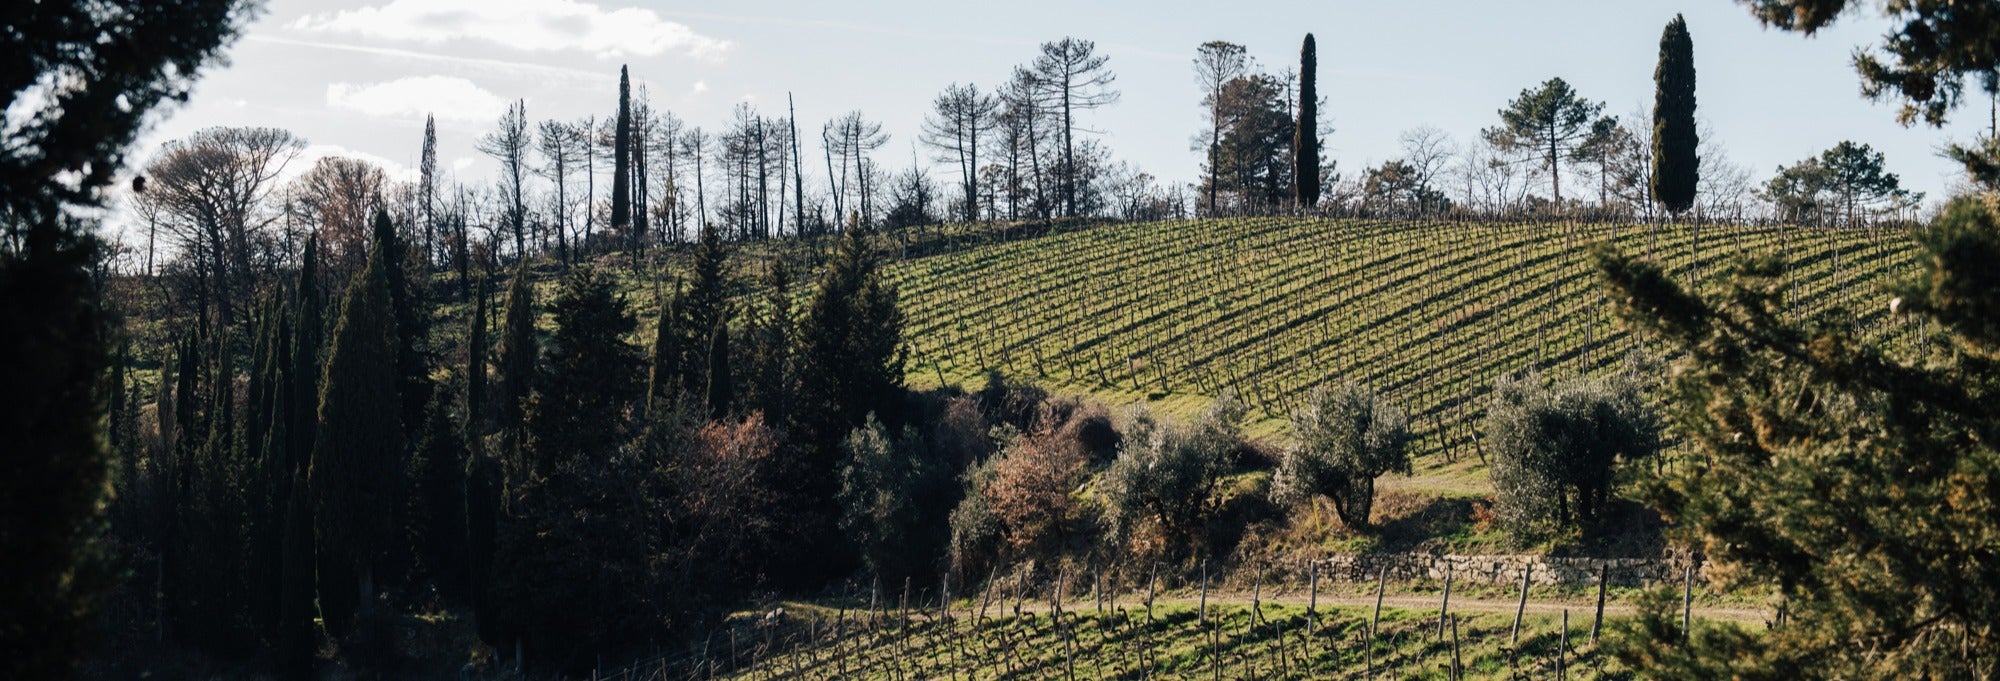 Visite autour du vin à Radda in Chianti